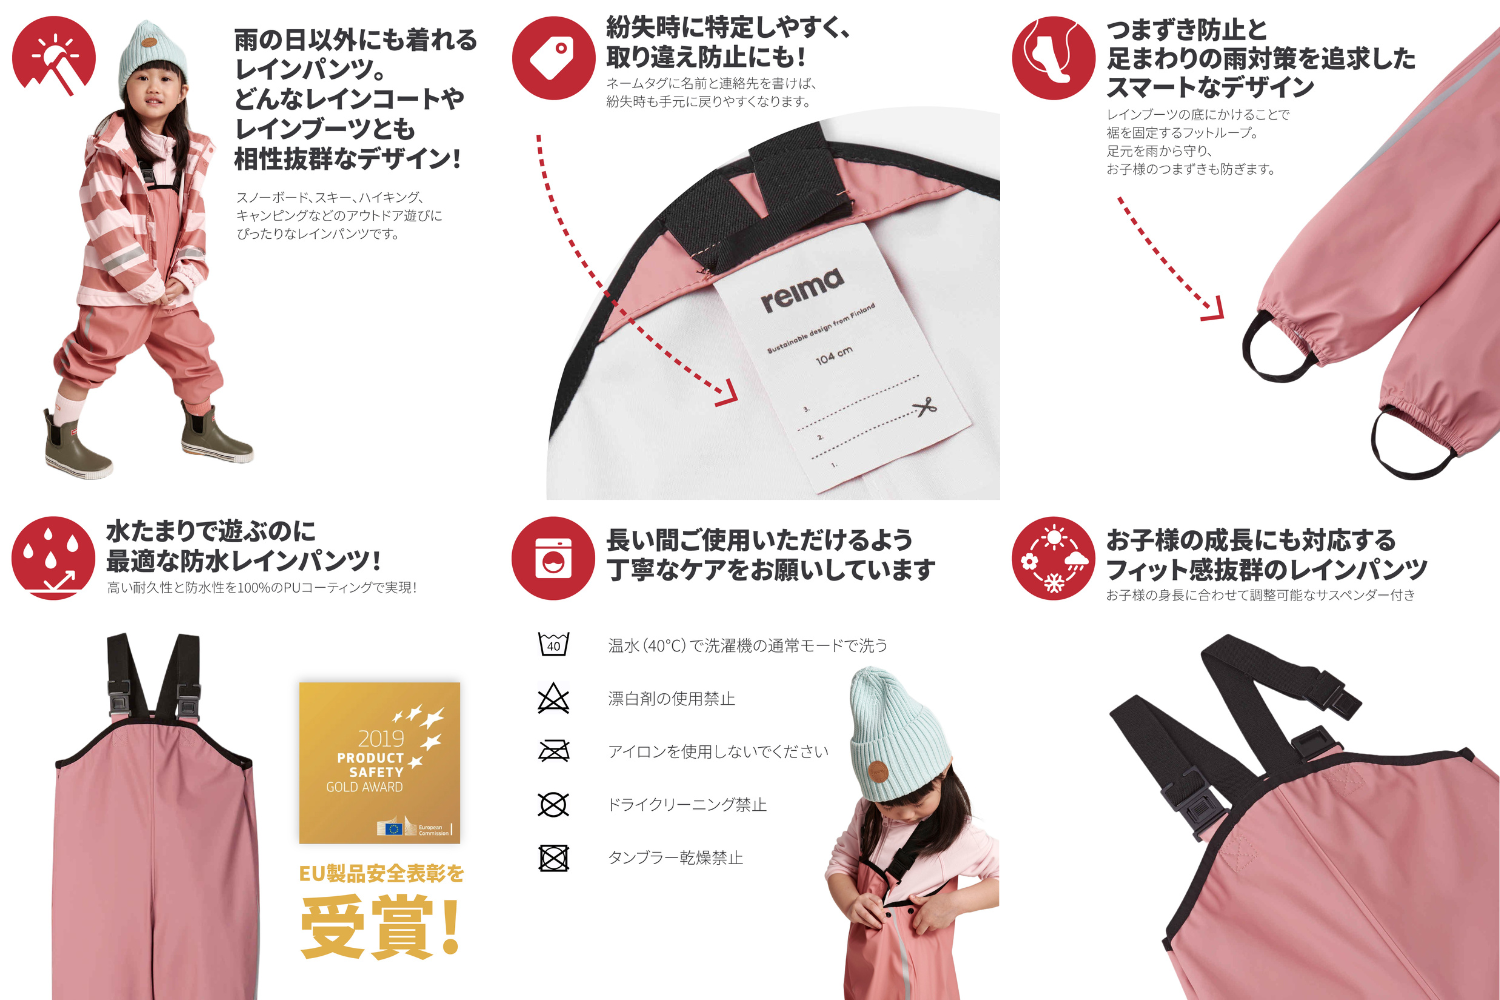 Humble Bunny case study for Reima Japan project e-commerce marketplaces design